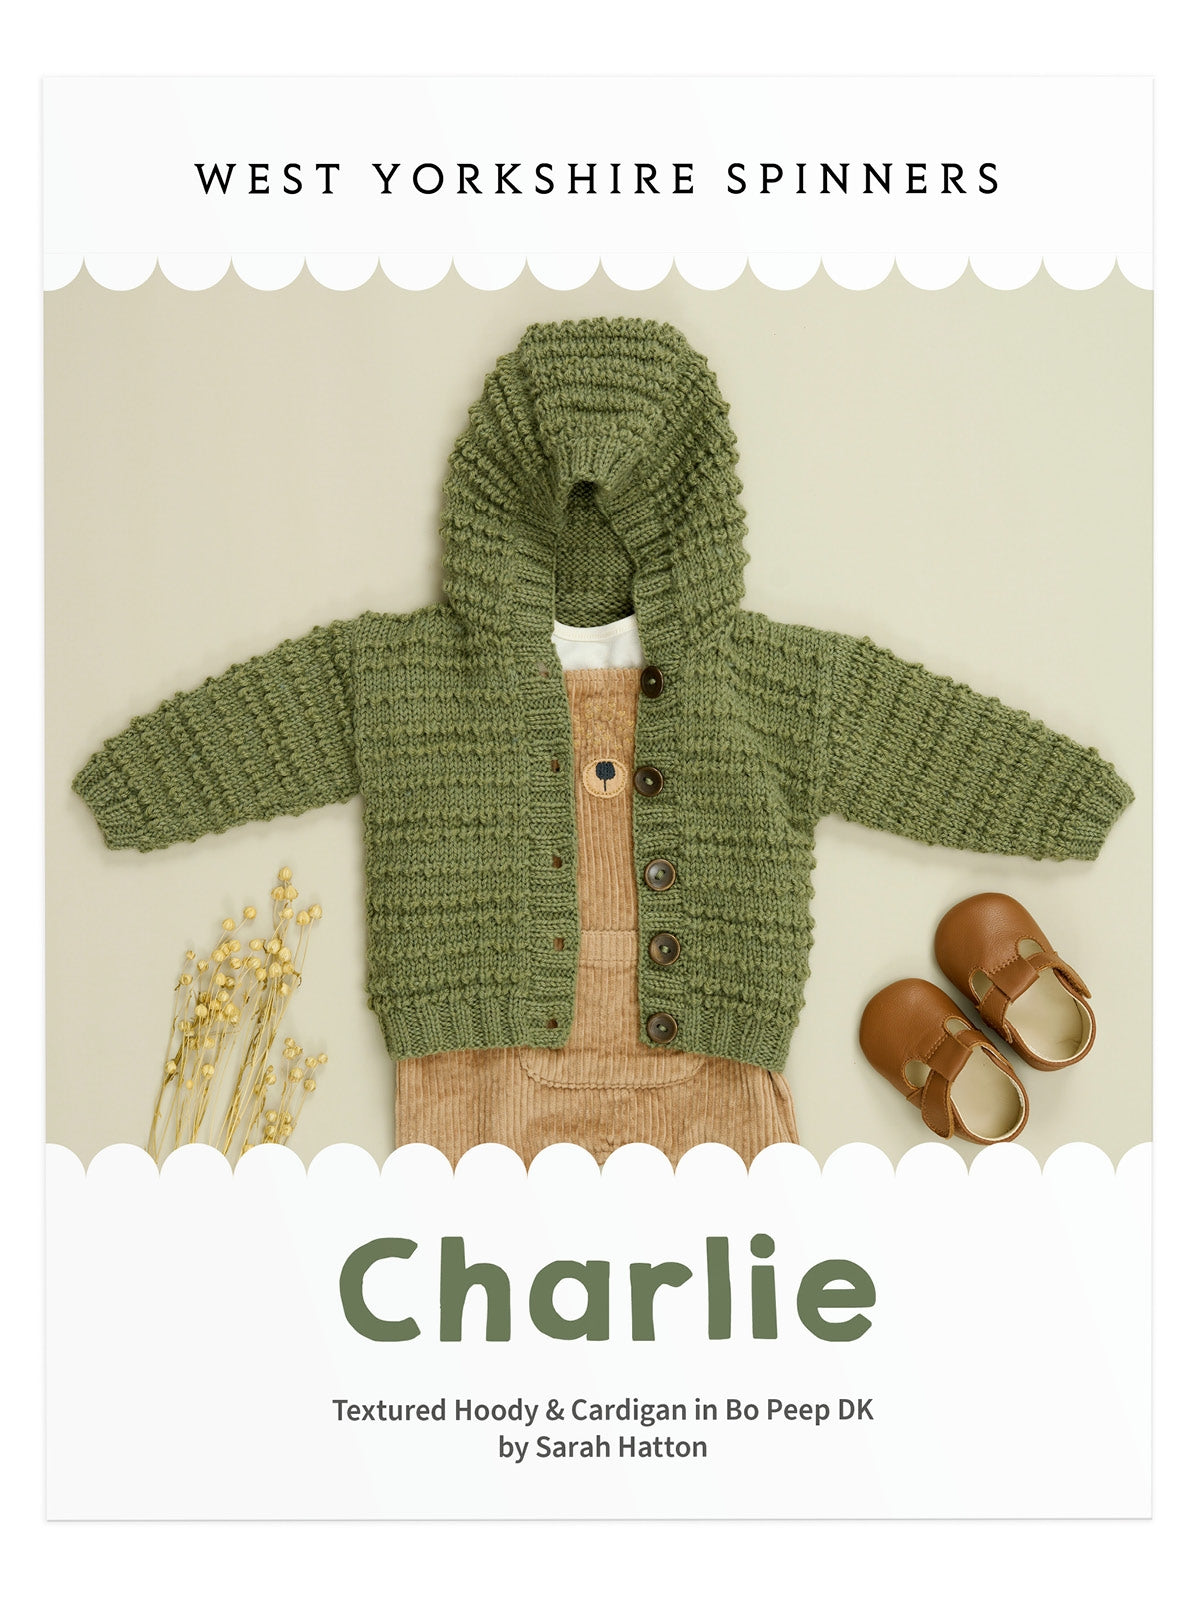 WYS Charlie: Textured Hoody & Cardigan in Bo Peep DK by Sarah Hatton